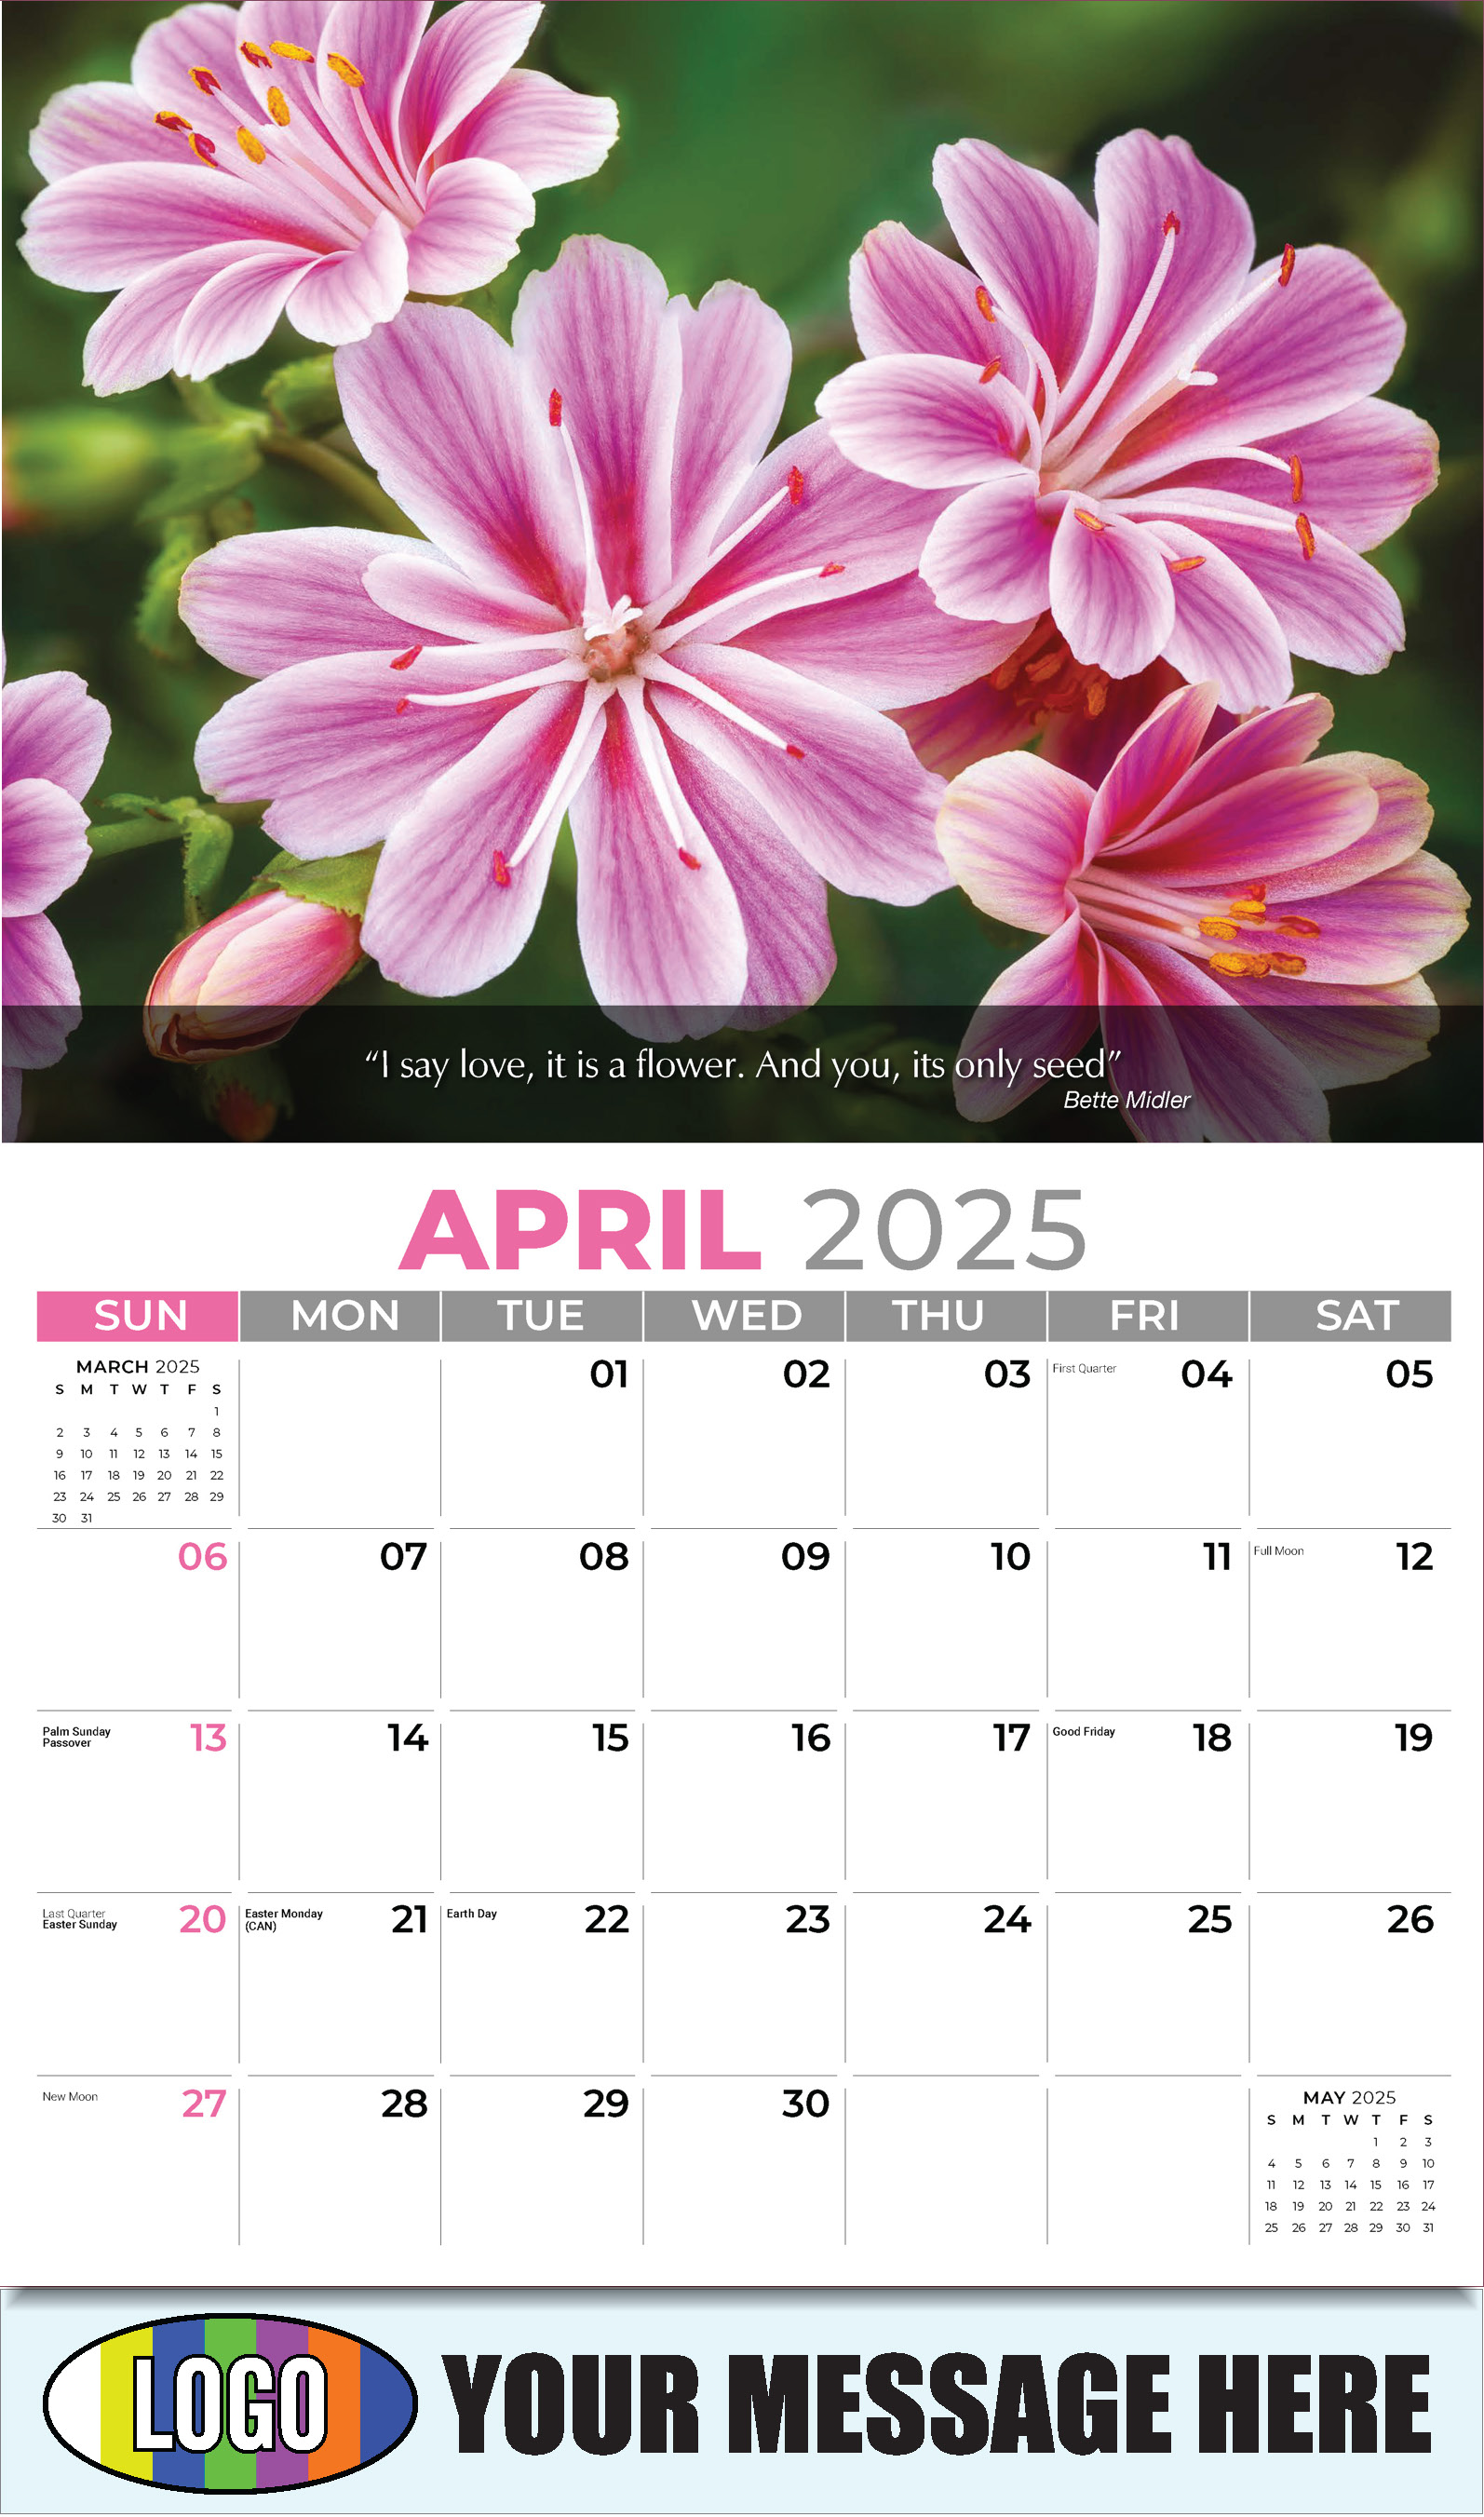 Flowers and Gardens 2025 Business Advertising Calendar - April